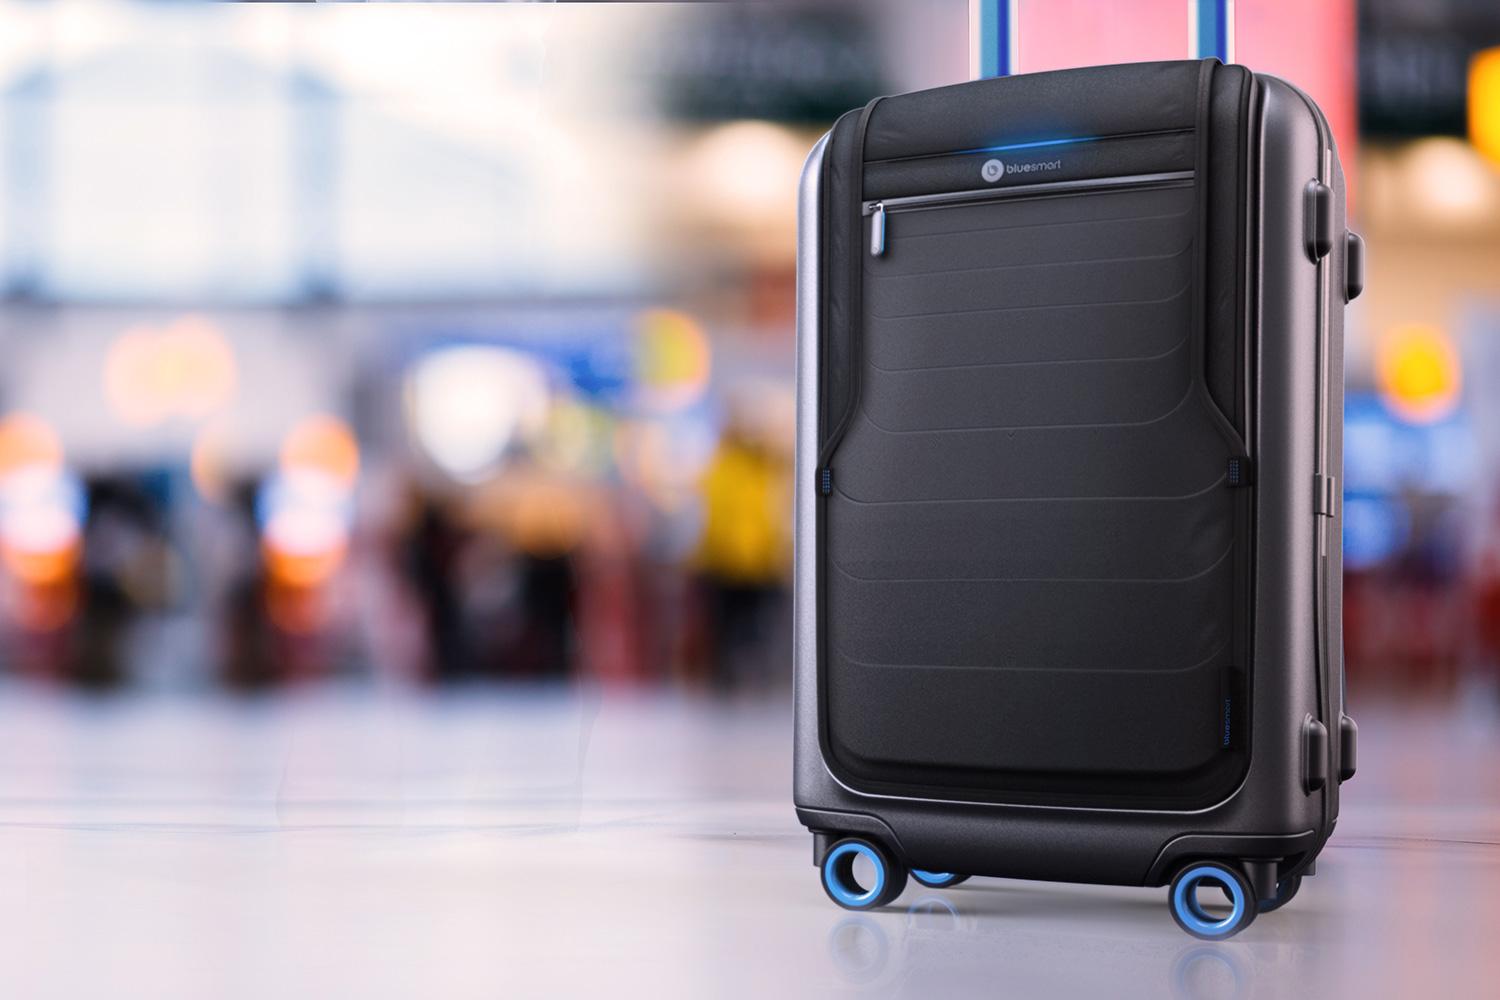 Bluesmart connected suitcase